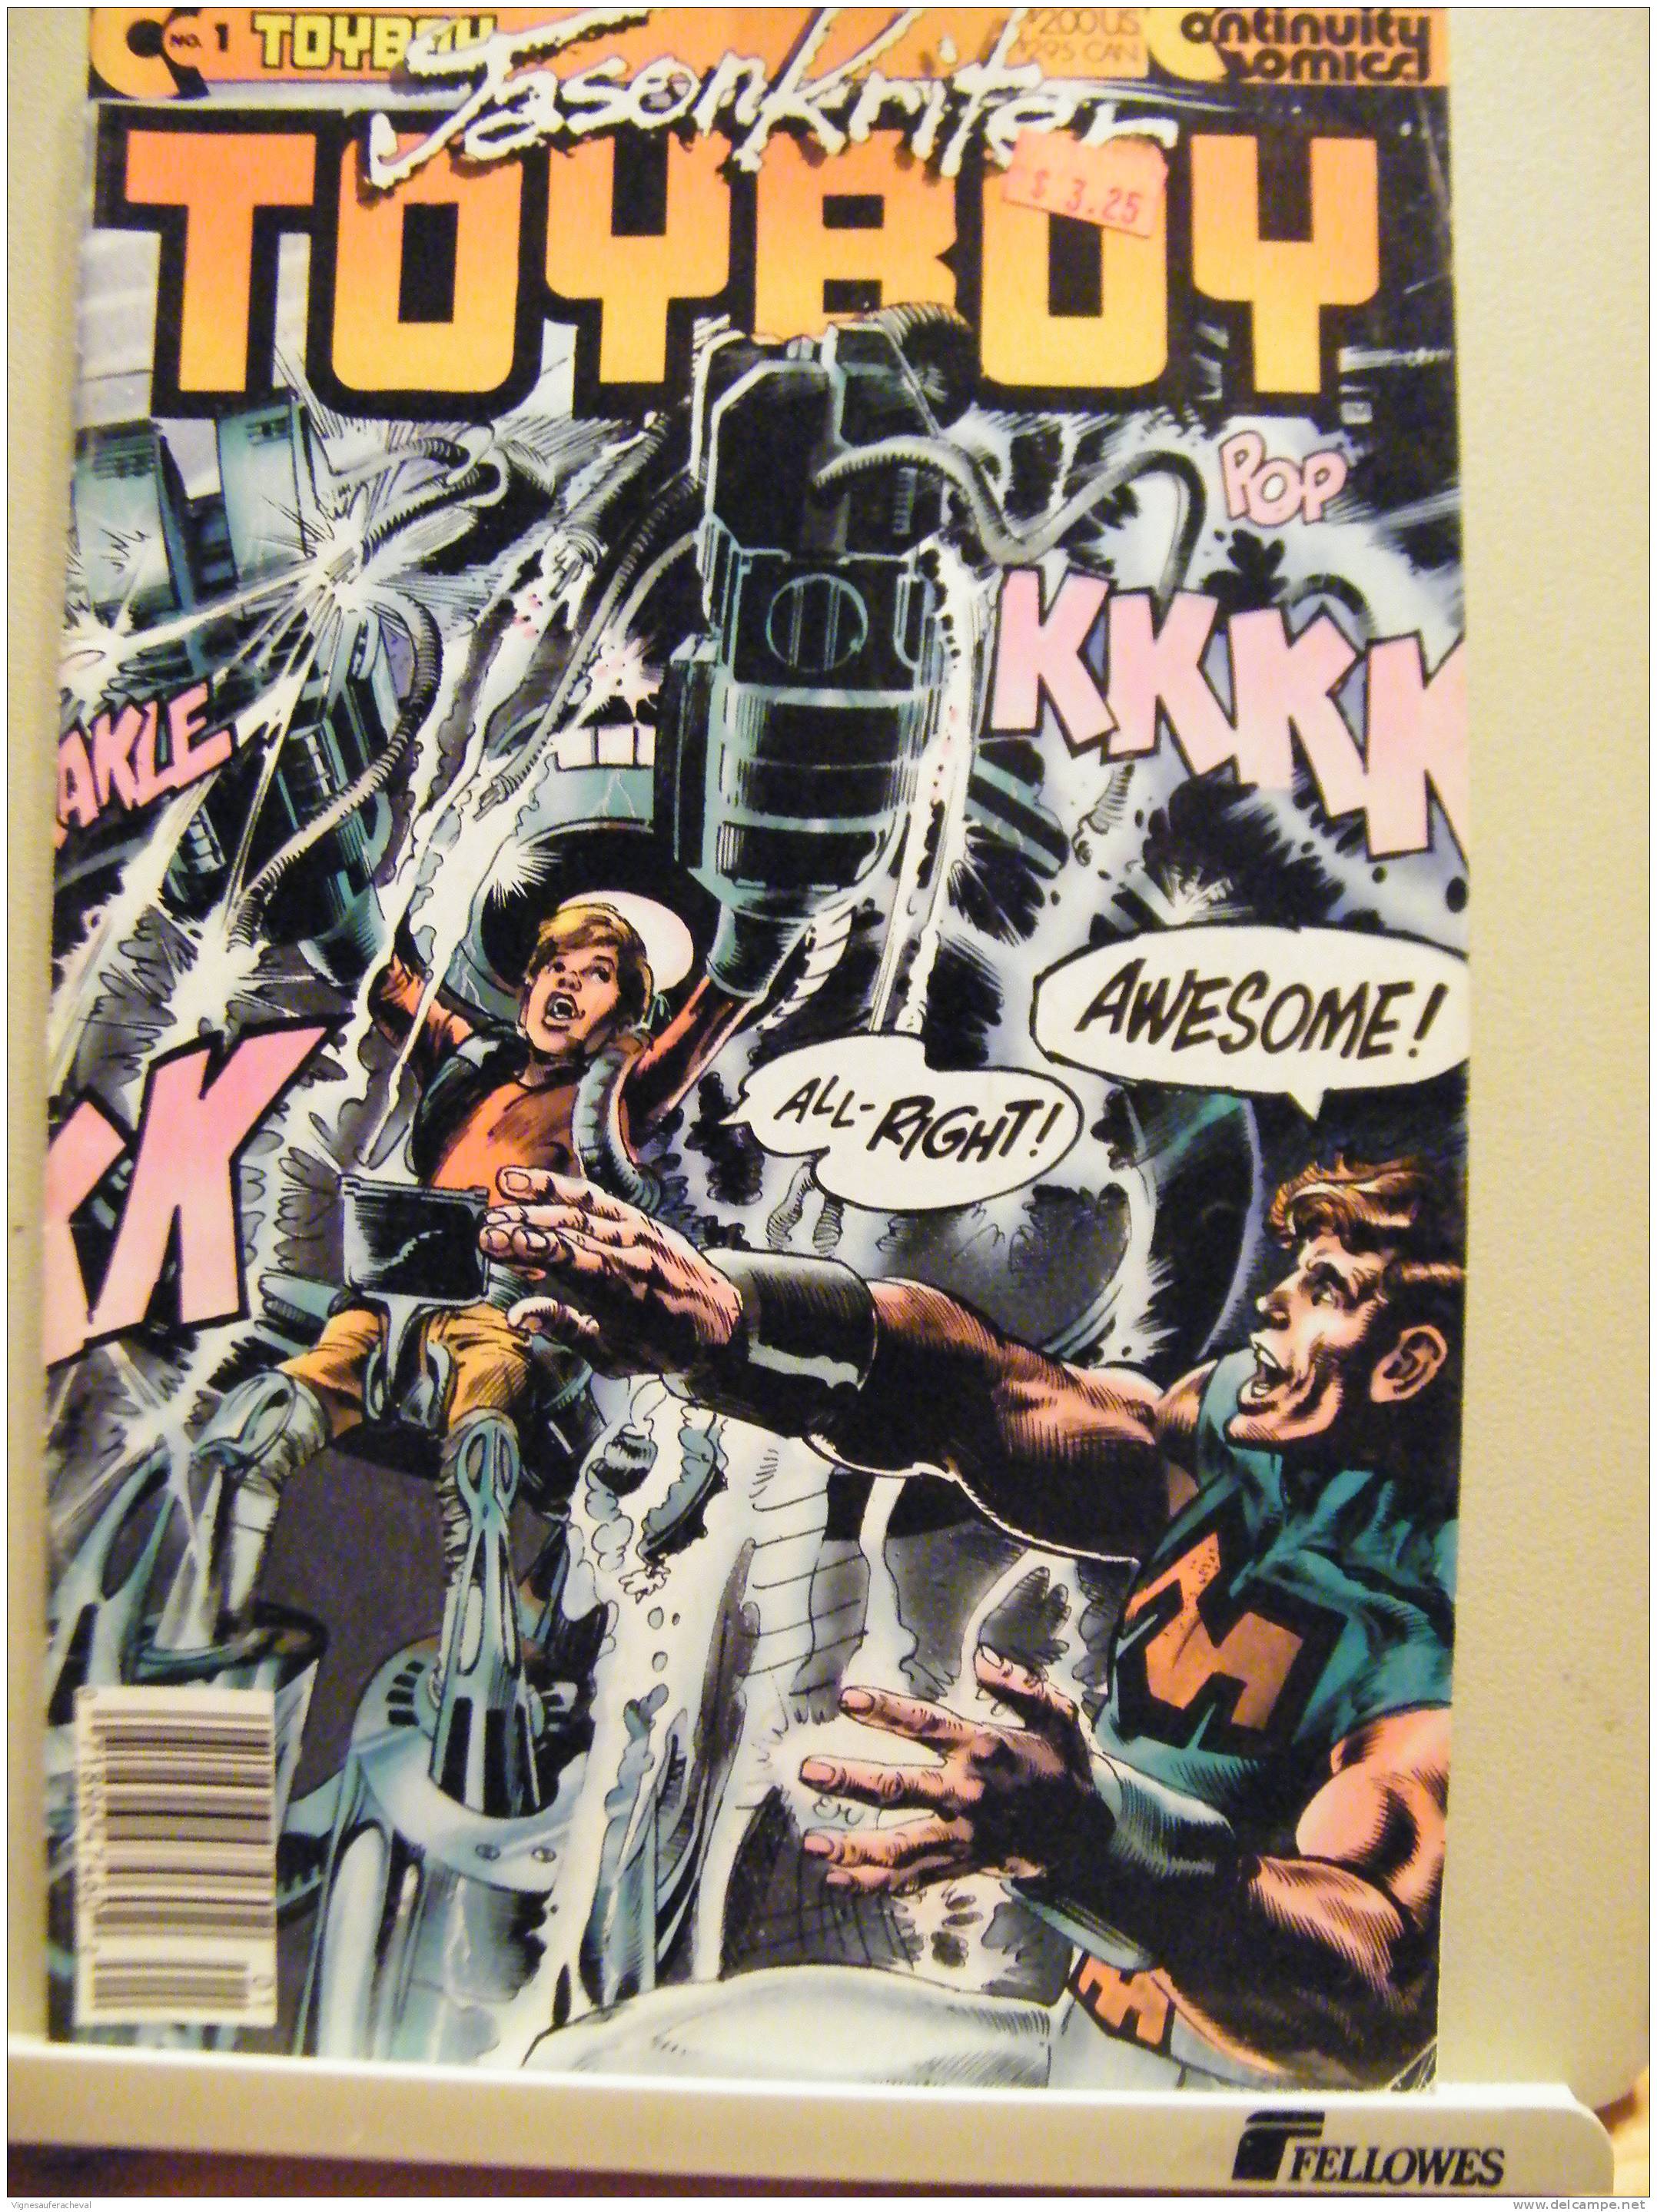 Continuity Comics-no 1 Oct 86:Jason Kriter: Toyboy - Other Publishers